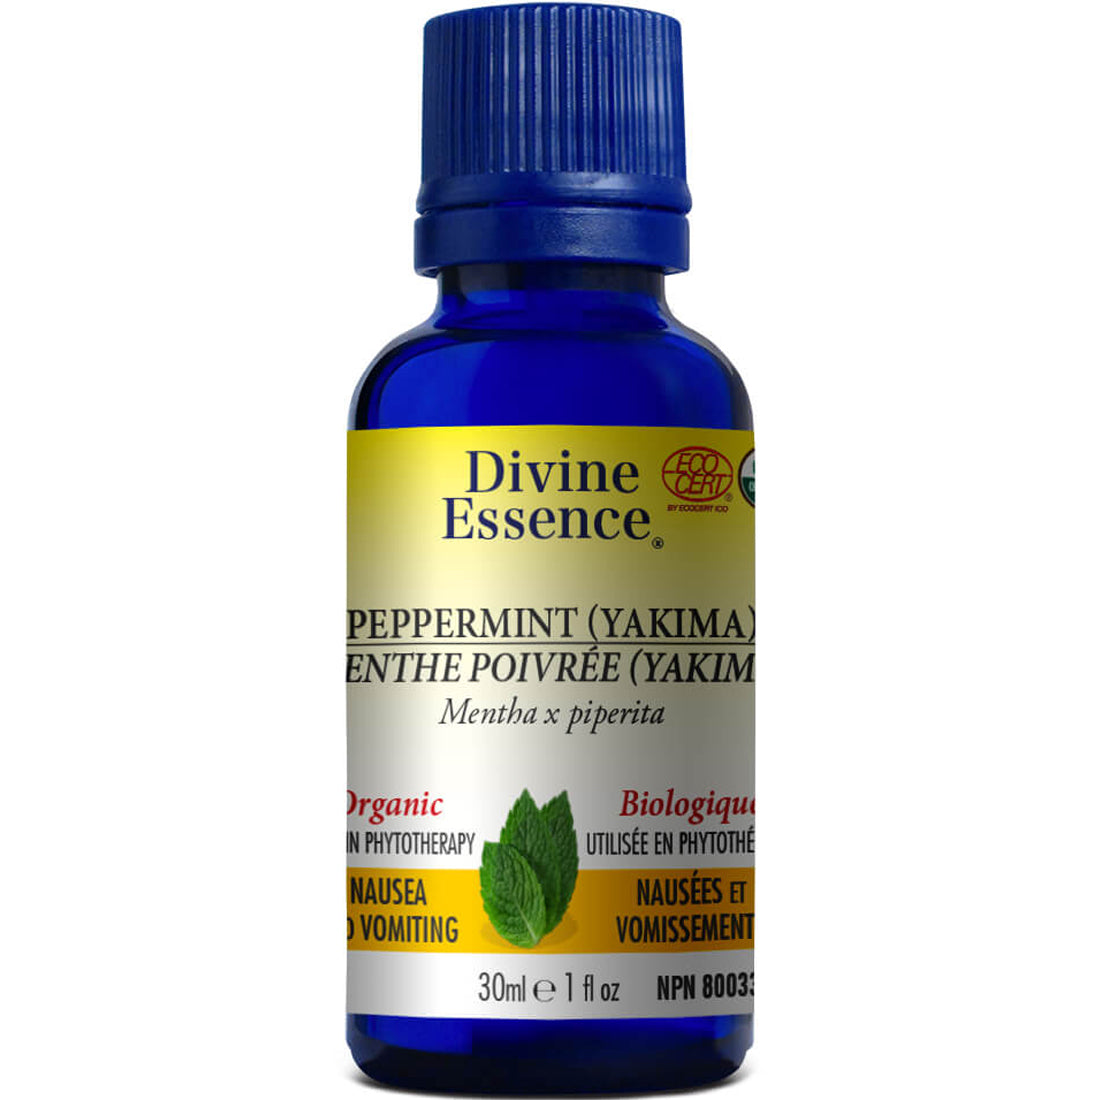 Divine Essence Peppermint Yakima, Organic, 30ml